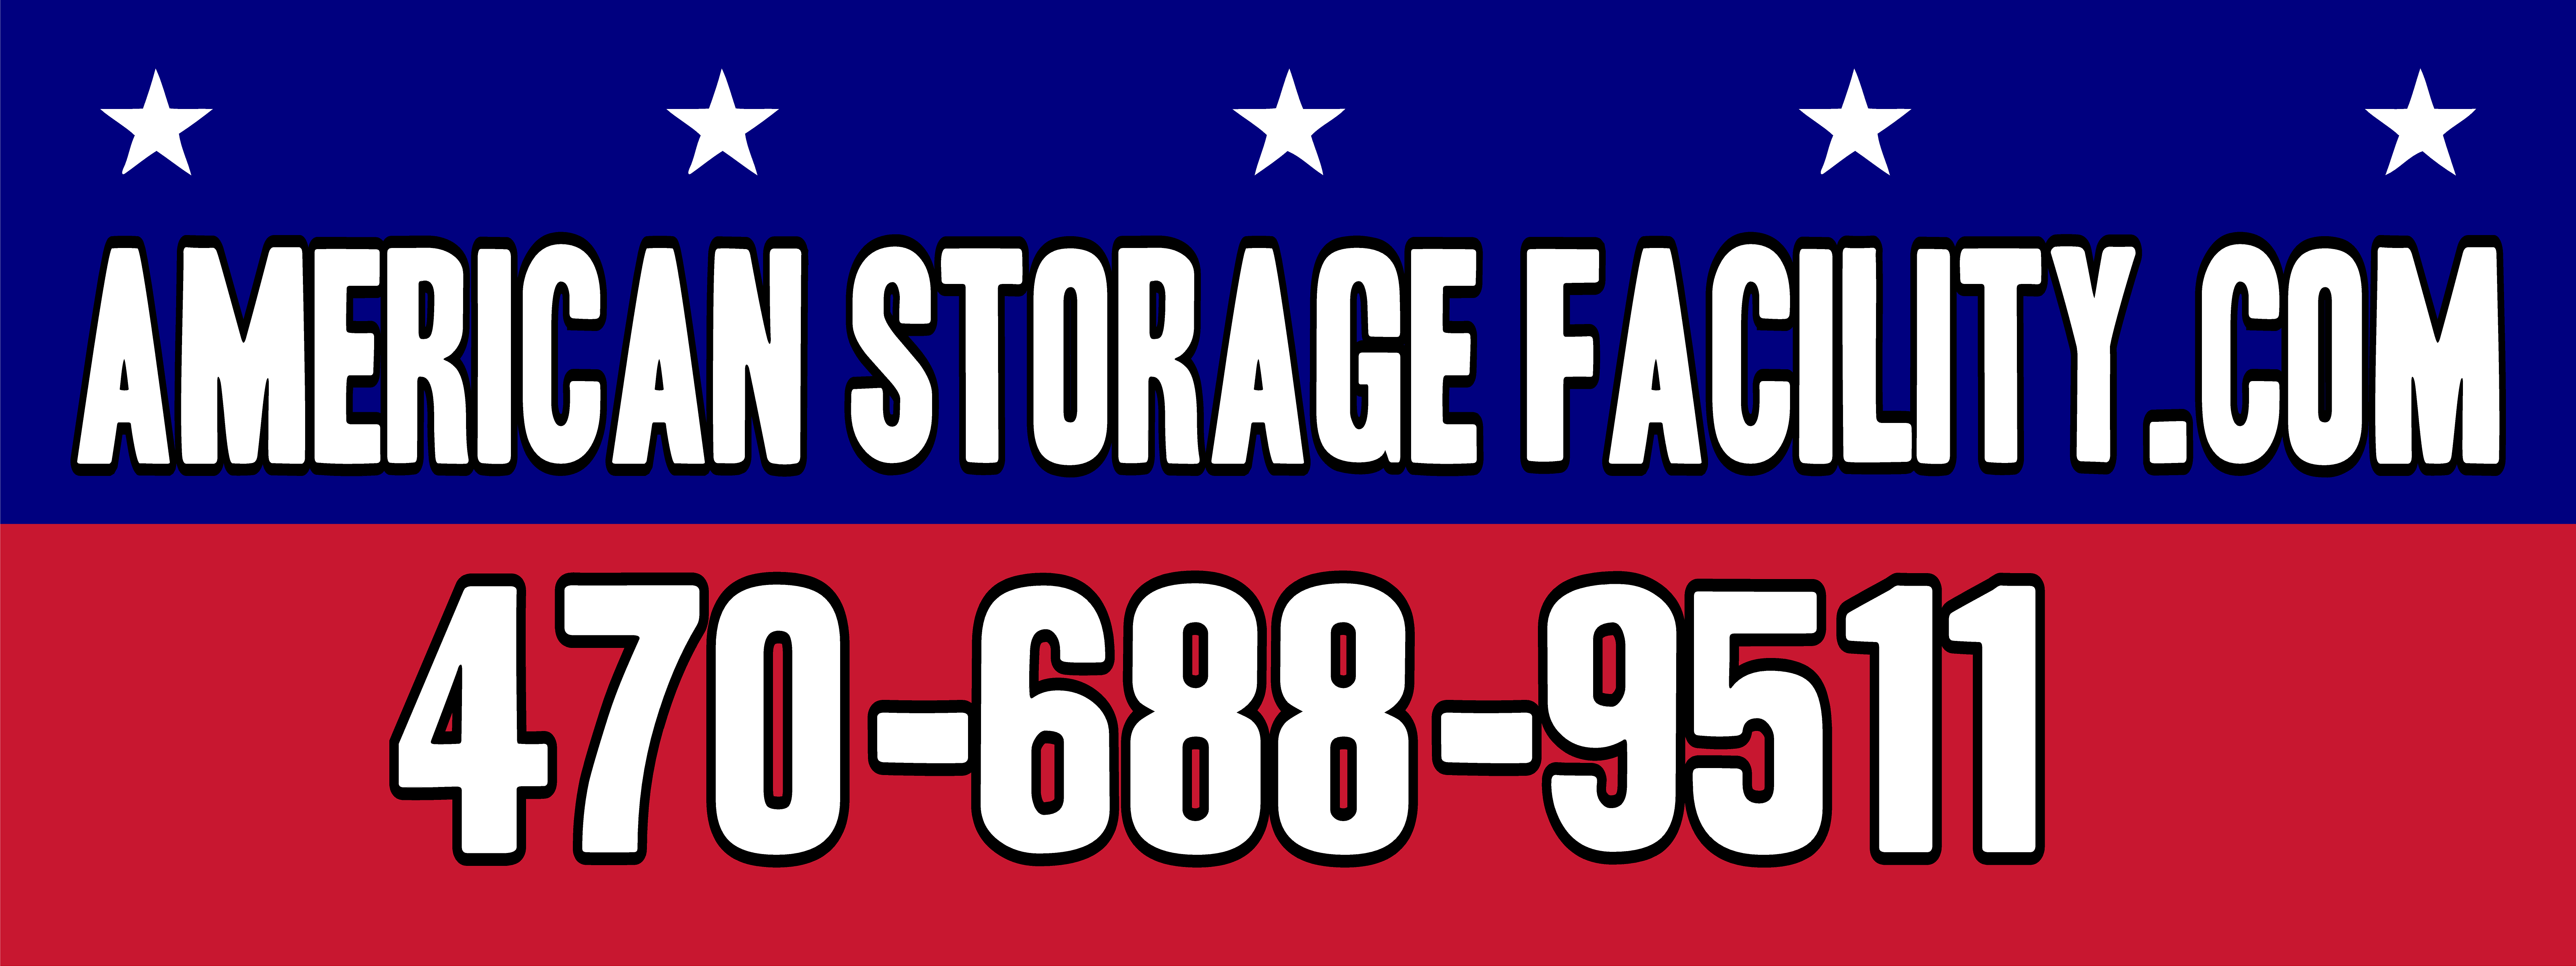 American Storage Facility logo